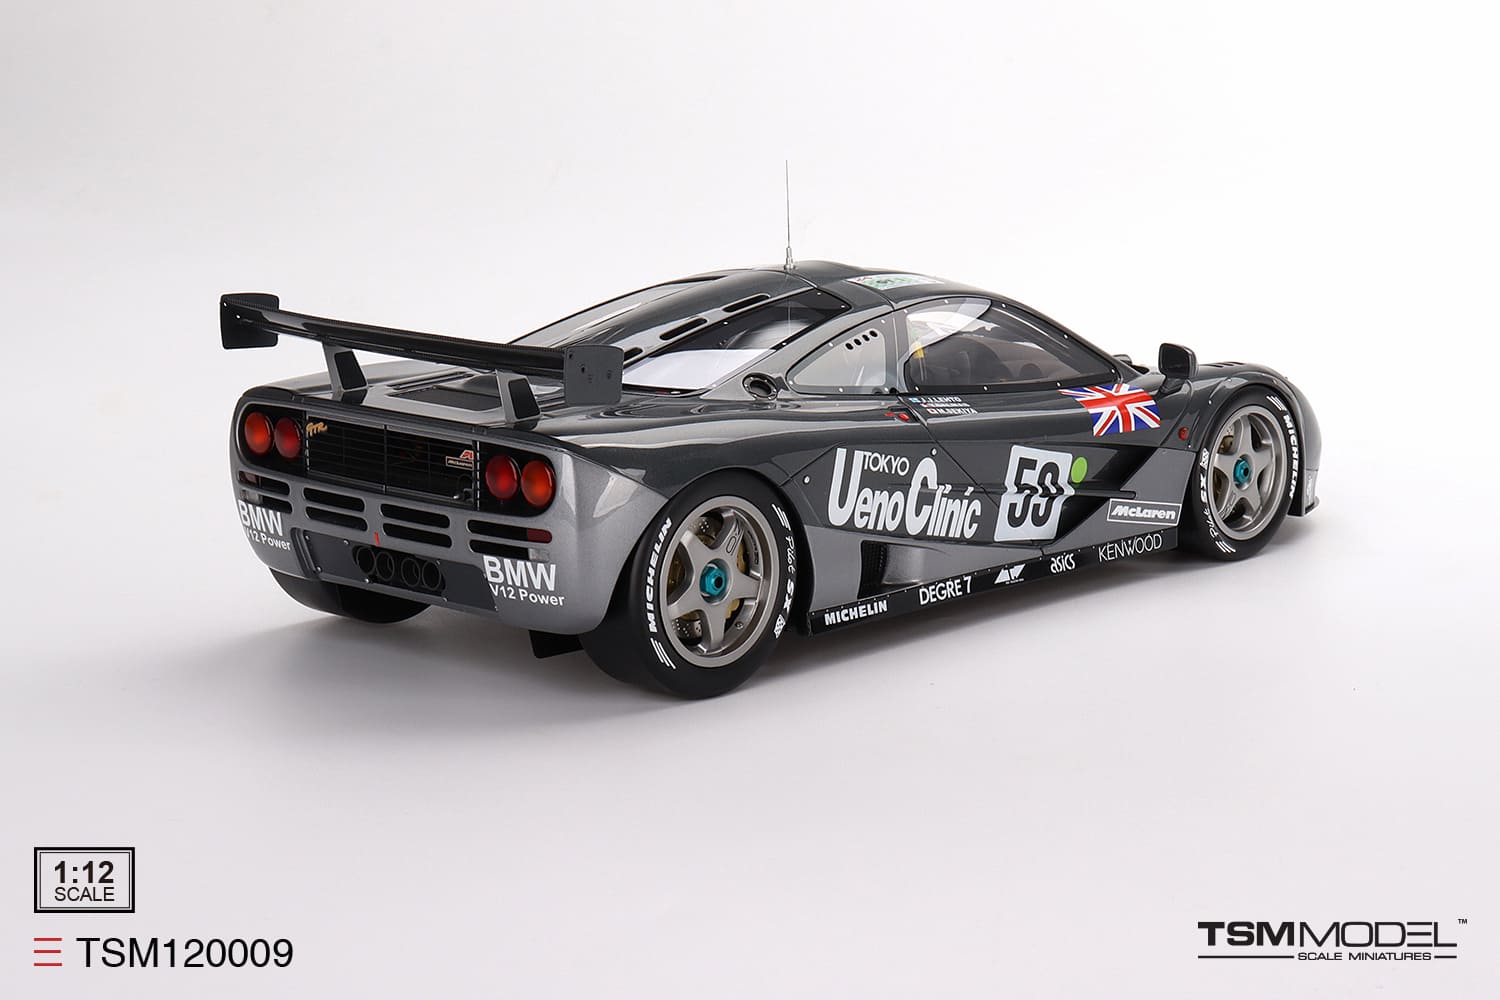 1:12 scale McLaren F1 GTR Le Mans winner 1995